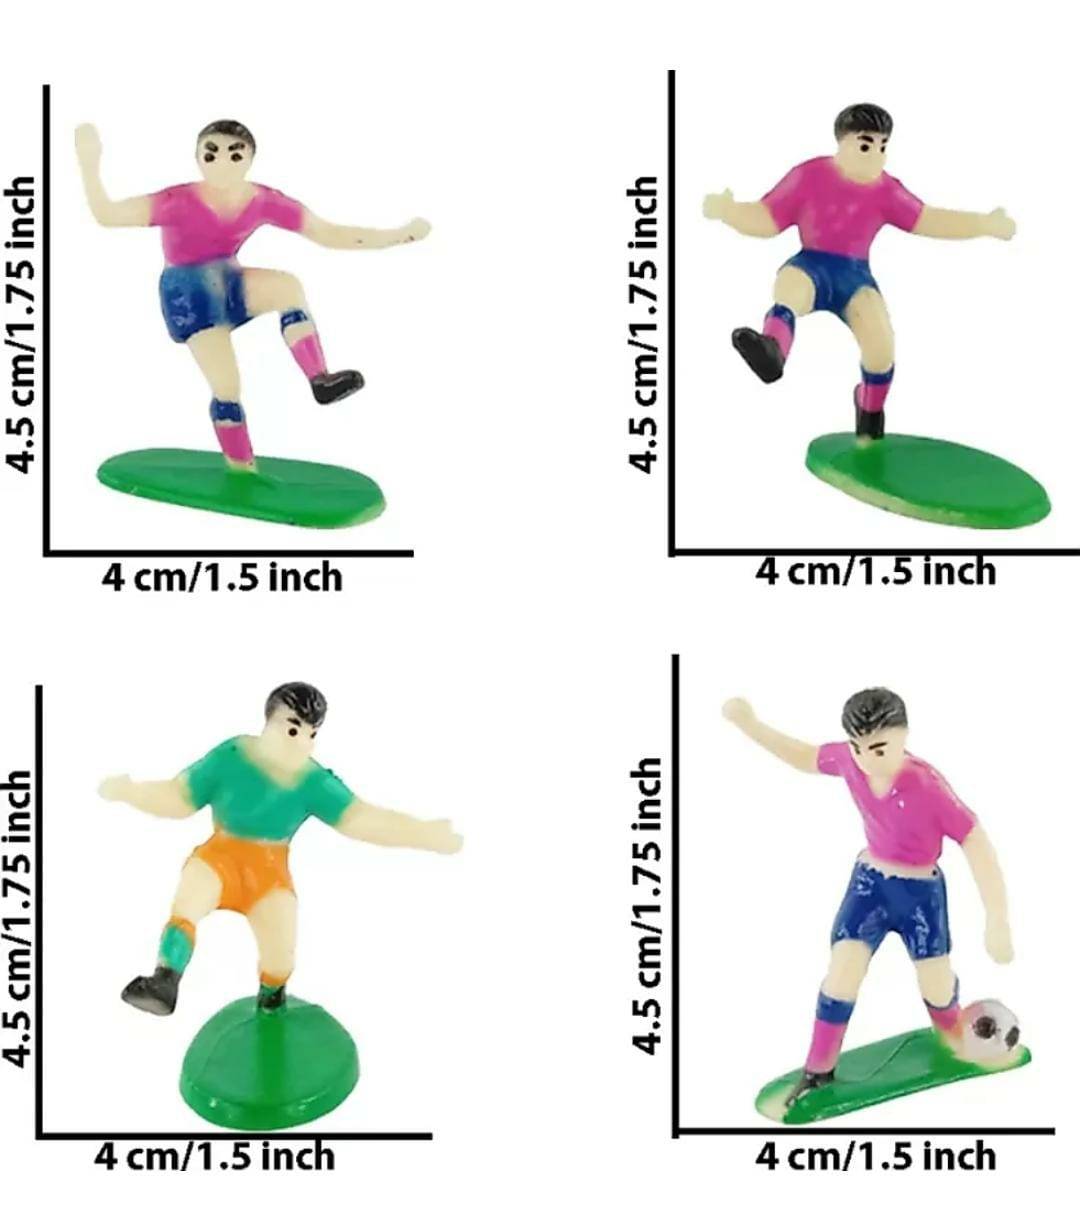 Footbal Soccer Cake Topper Set of 7
SUR 160